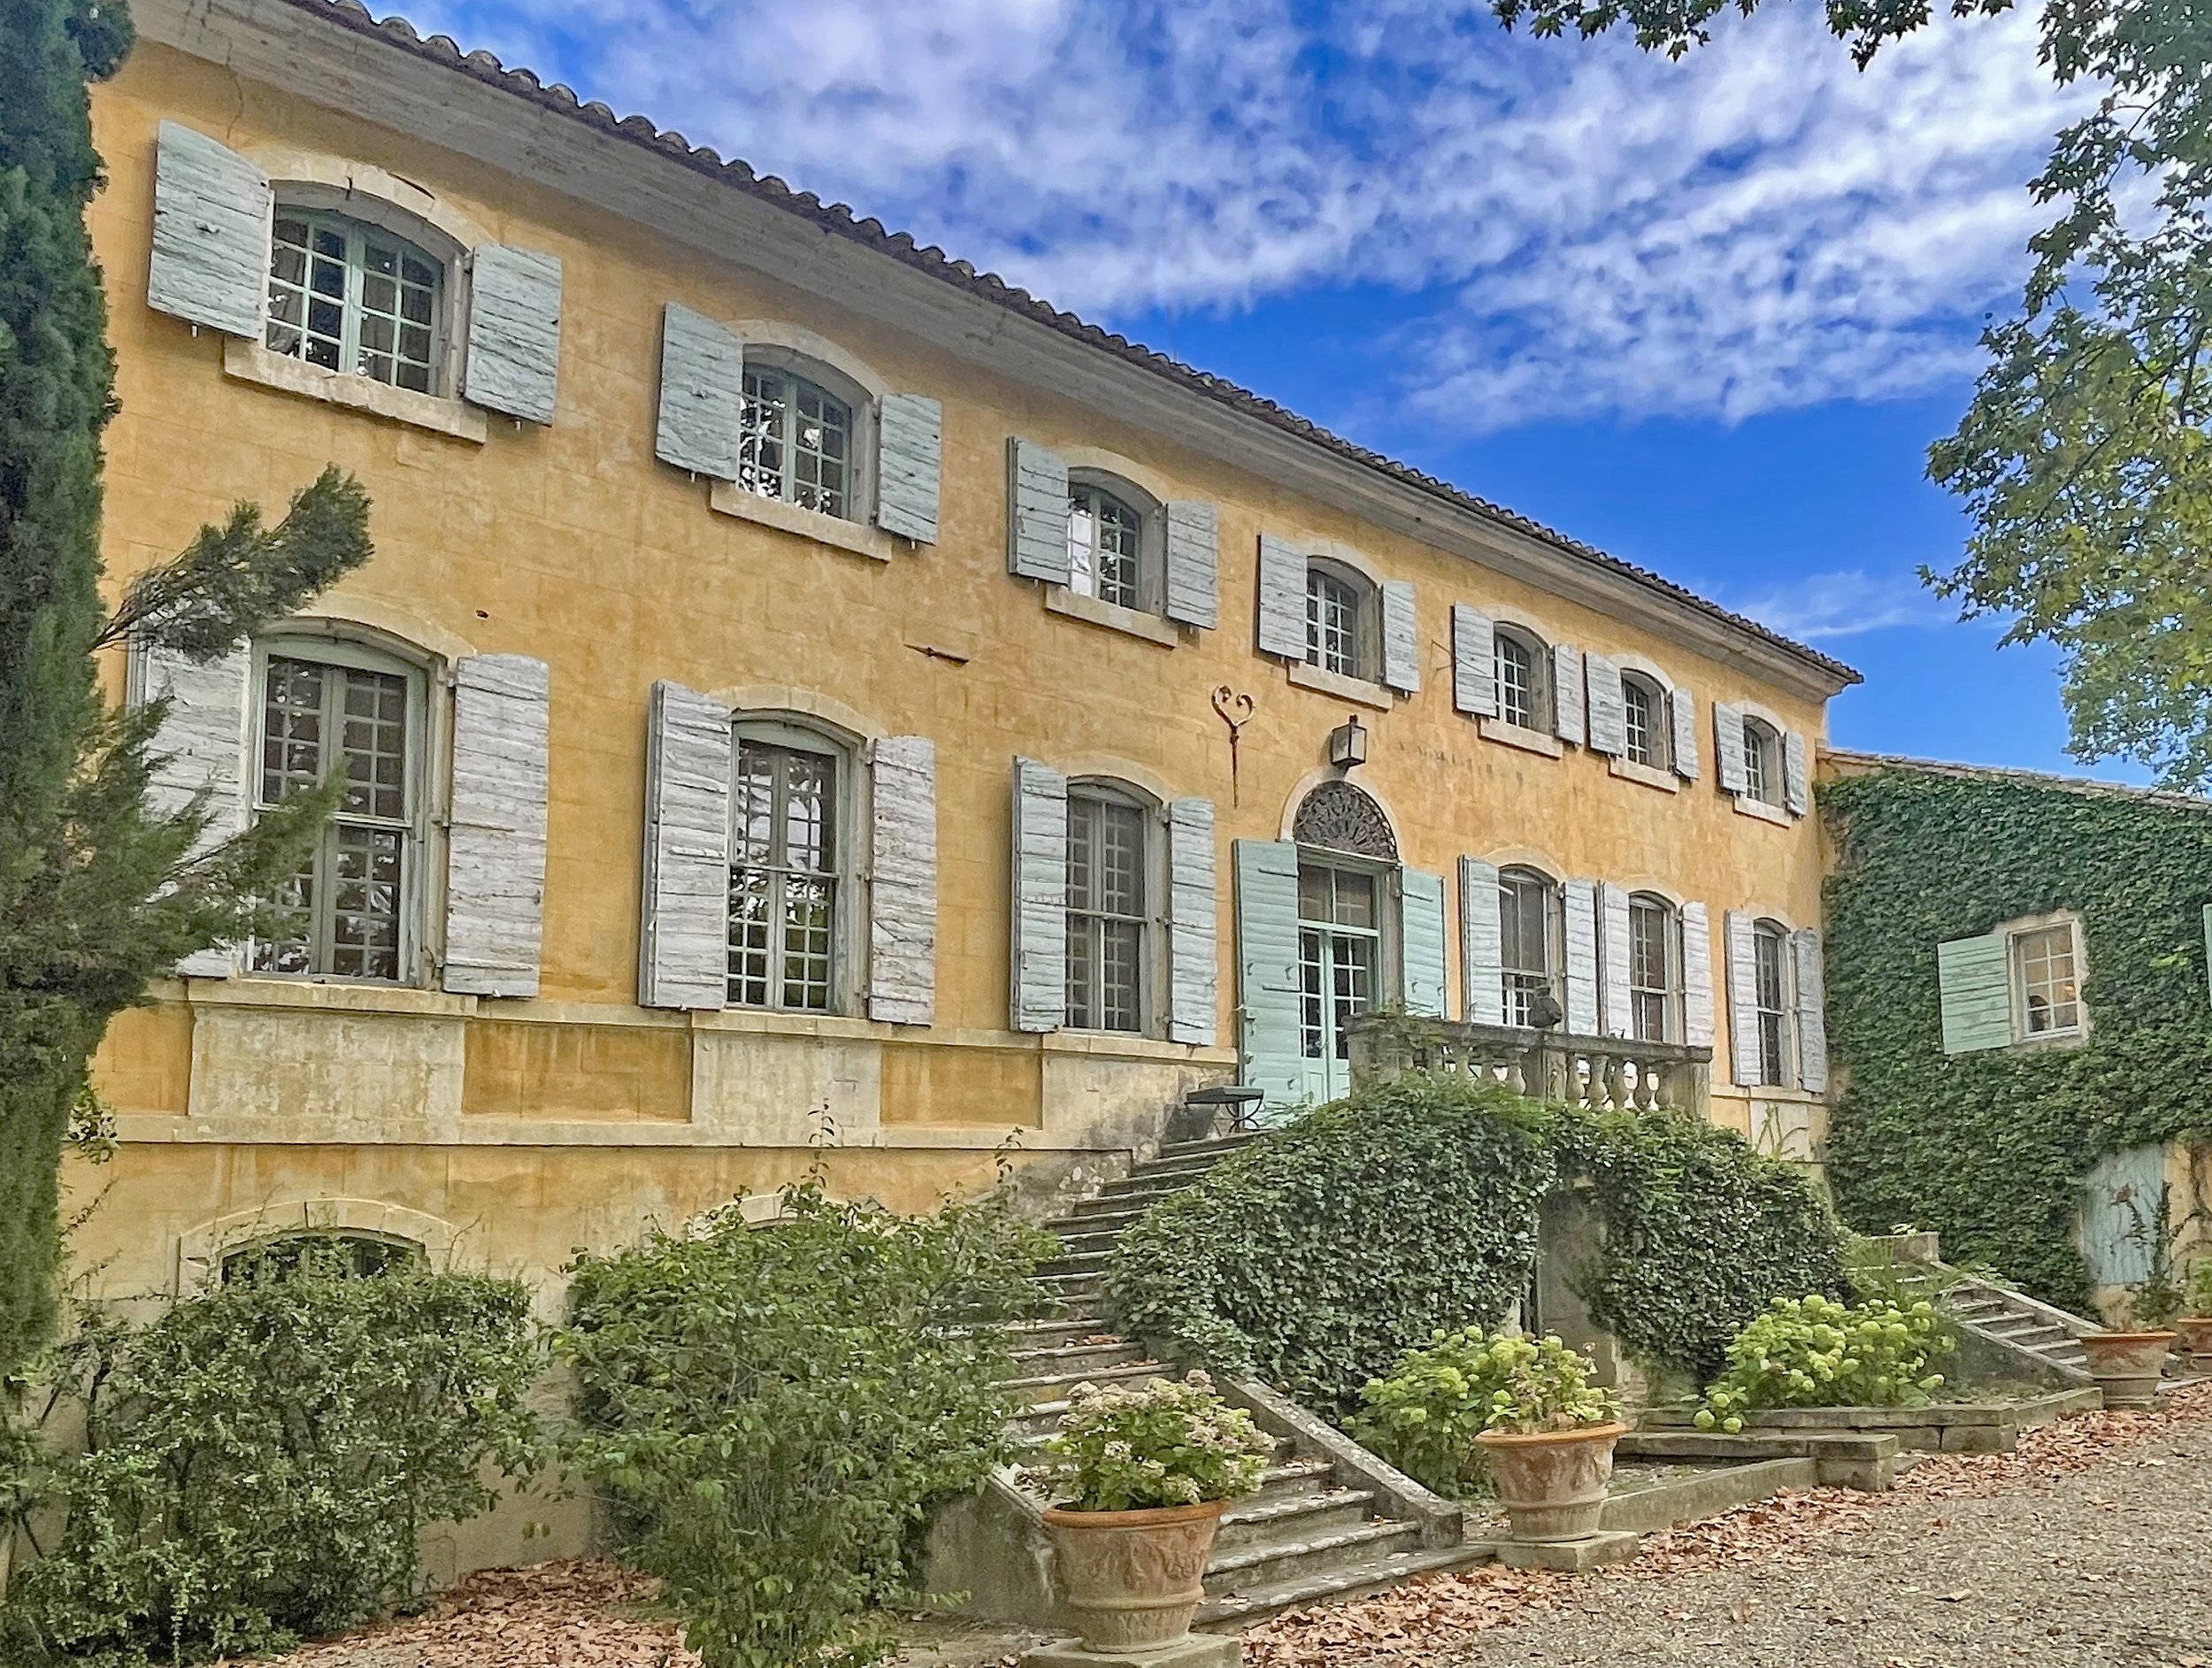 Francis York Emile Garcin Enchanting 18th Century Manor House Bastide For Sale in Provence, France 34.jpg